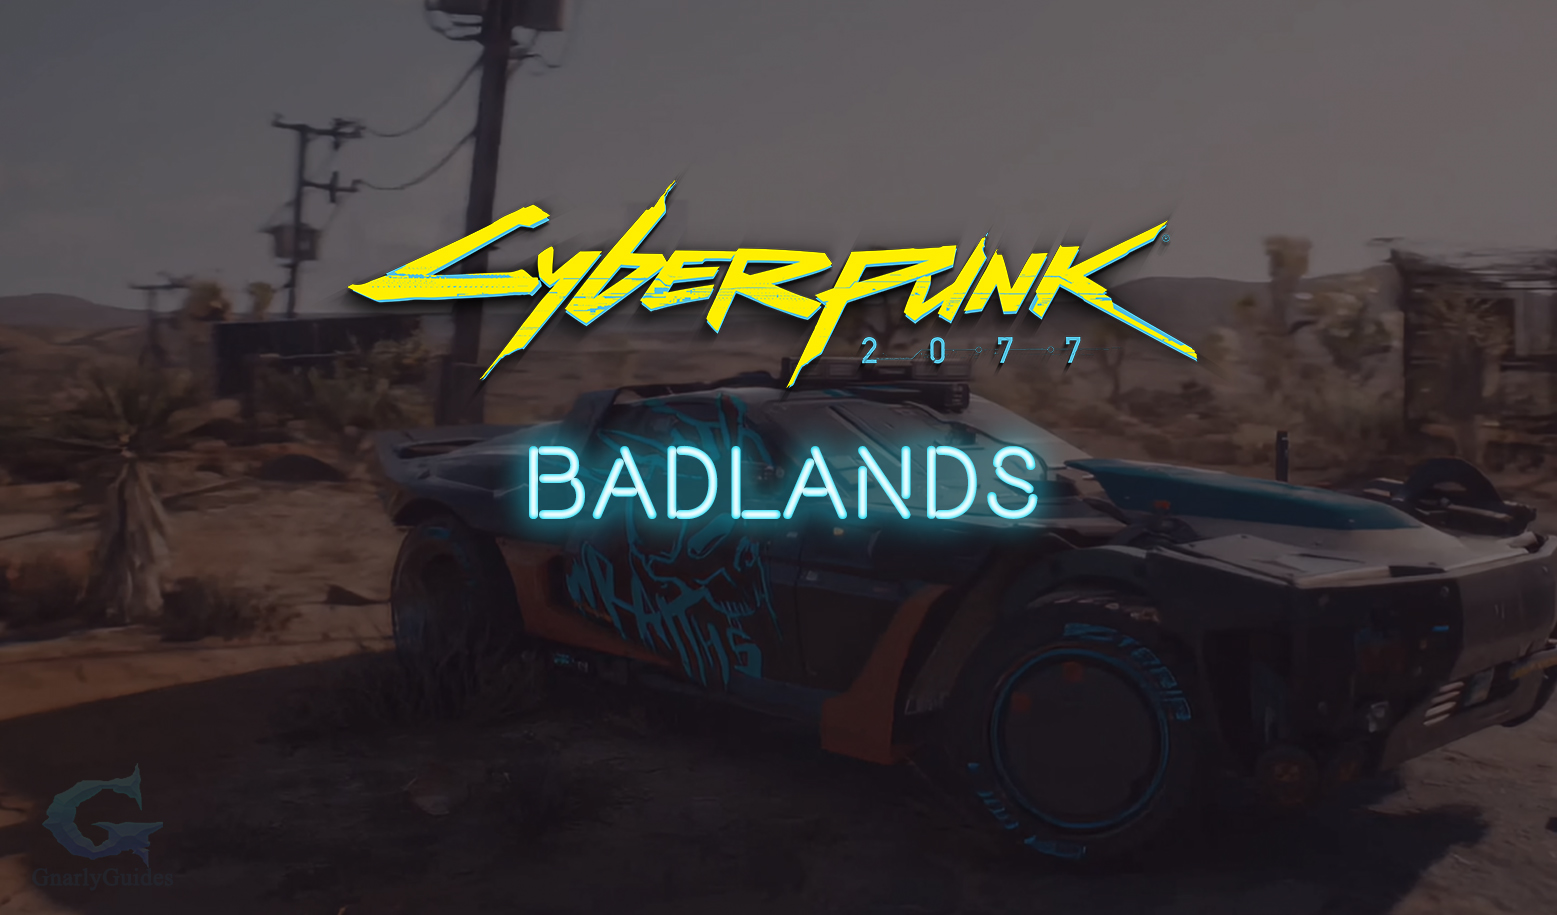 Badlands Cyberpunk 2077 District